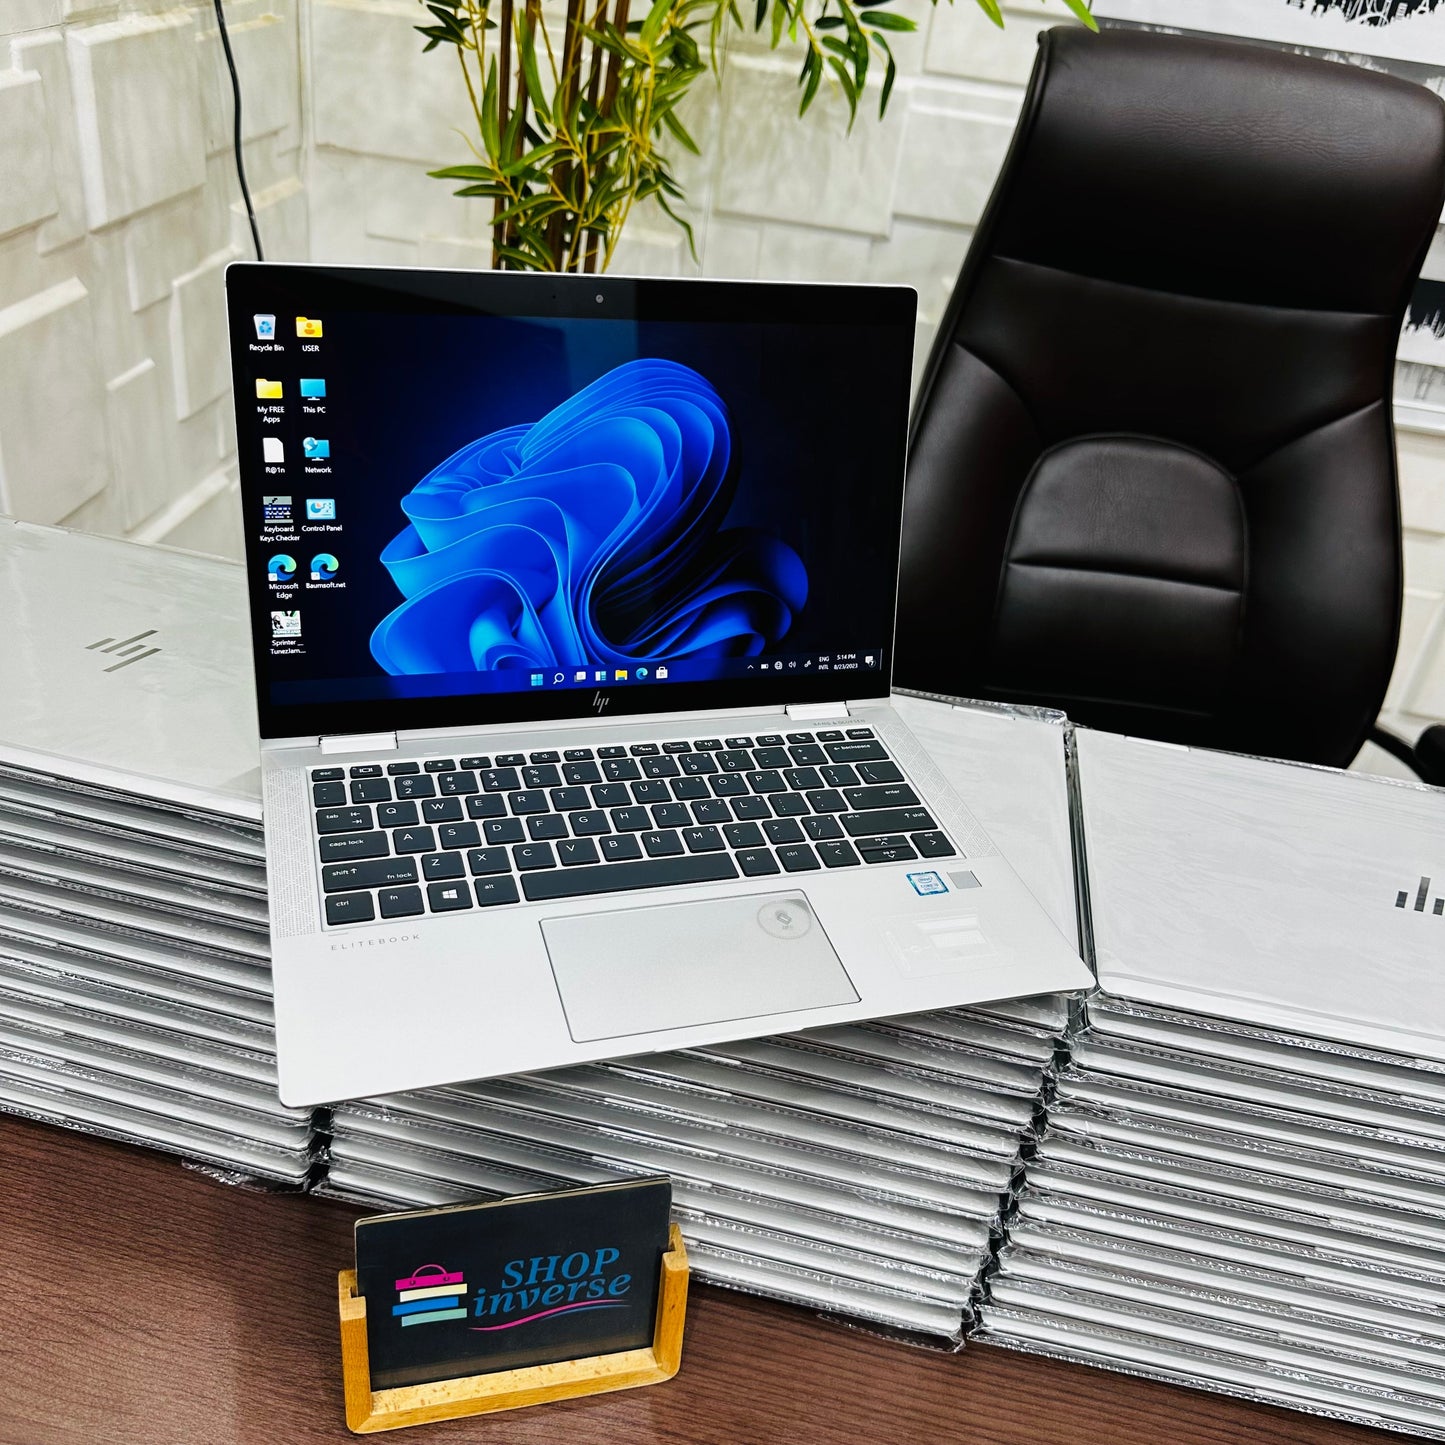 HP EliteBook 1030 x360 G3 - 8th Gen. Intel Core i5 - 256GB SSD - 8GB RAM - 4GB Total Graphics - HDMI - Touchscreen - Keyboard Light